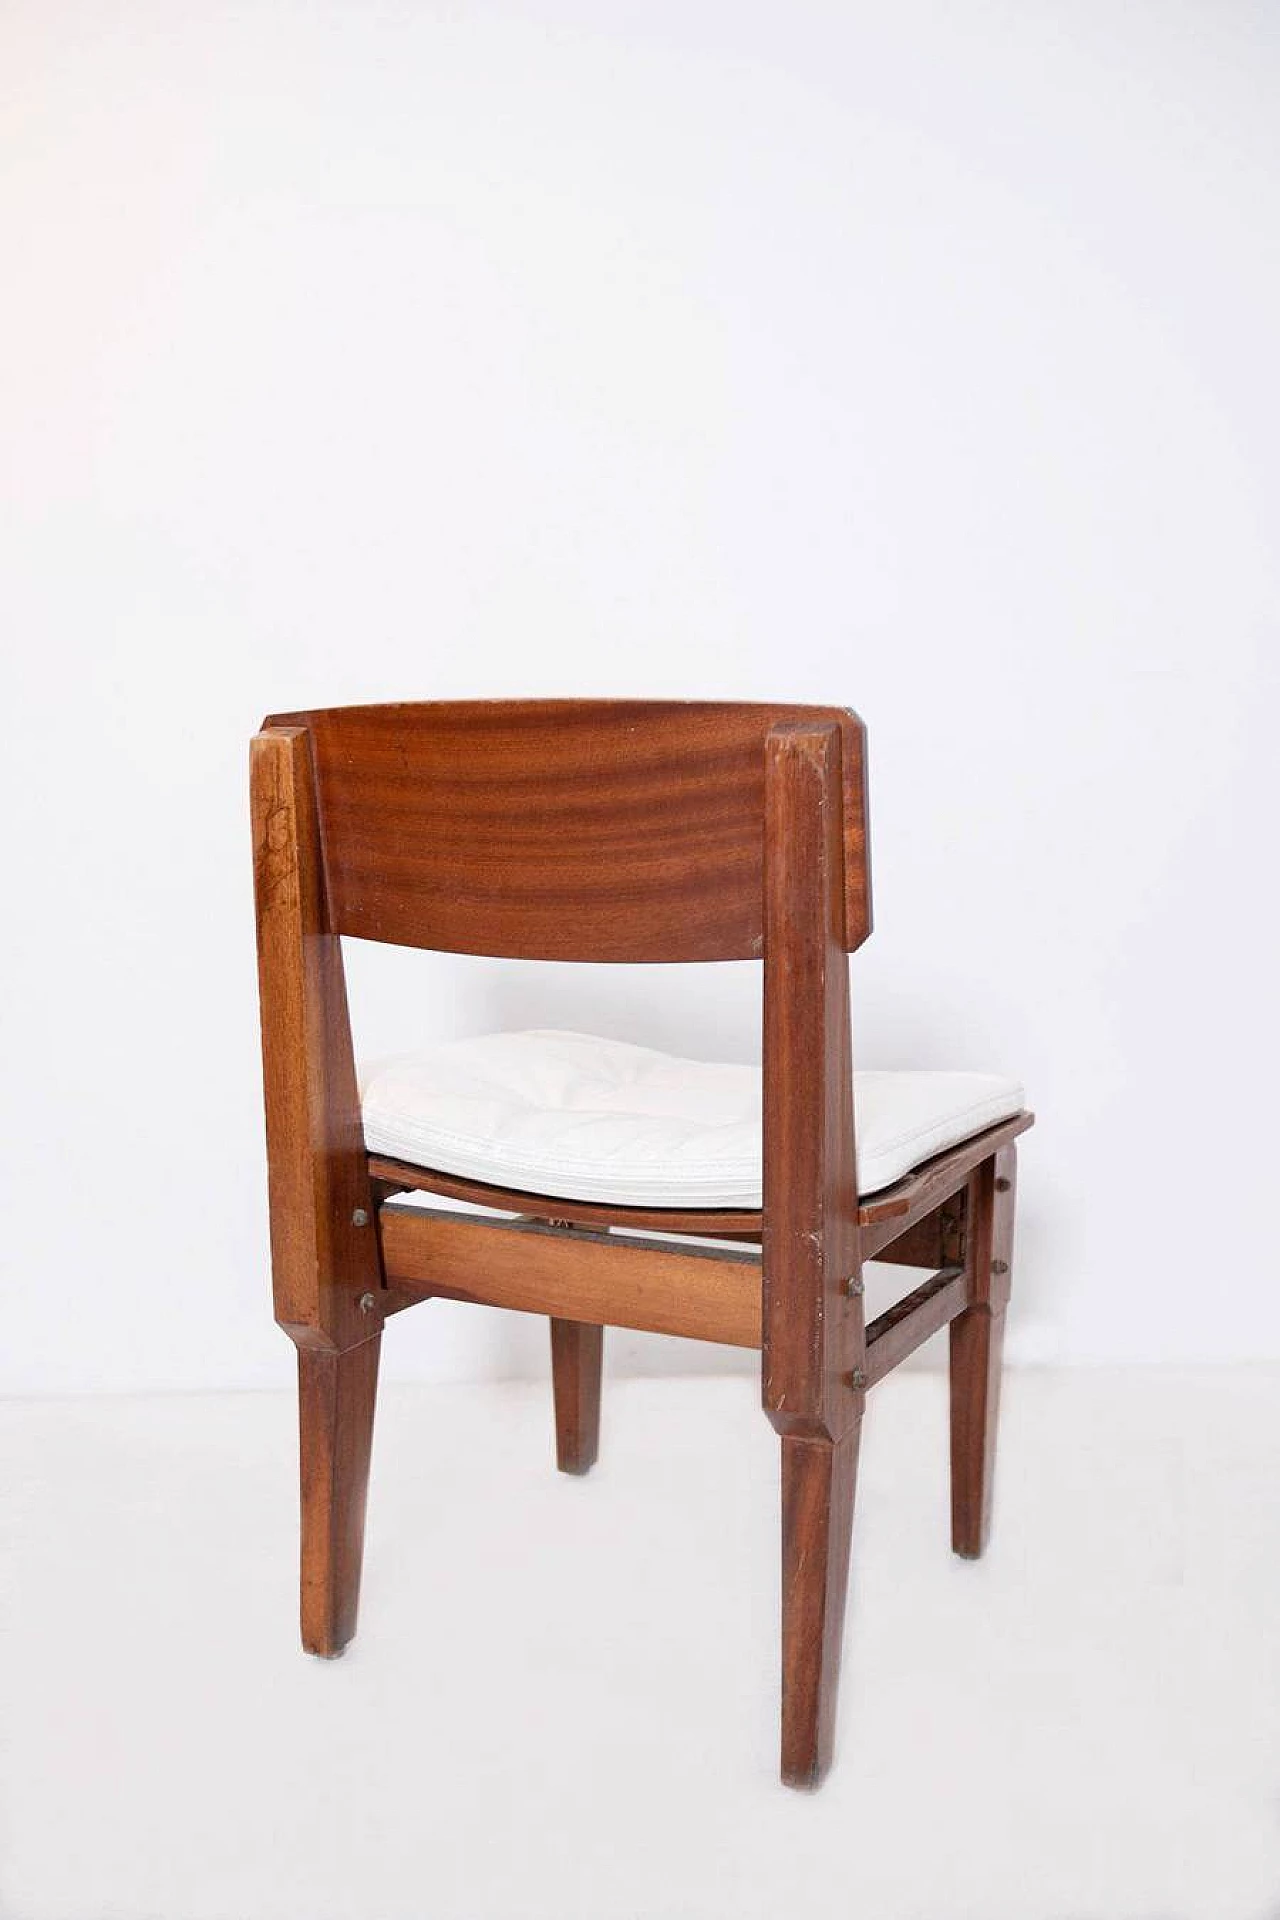 6 Chairs in mahogany and fabric by Vito Sangiradi for Pallante store Bari, 50s 1312276